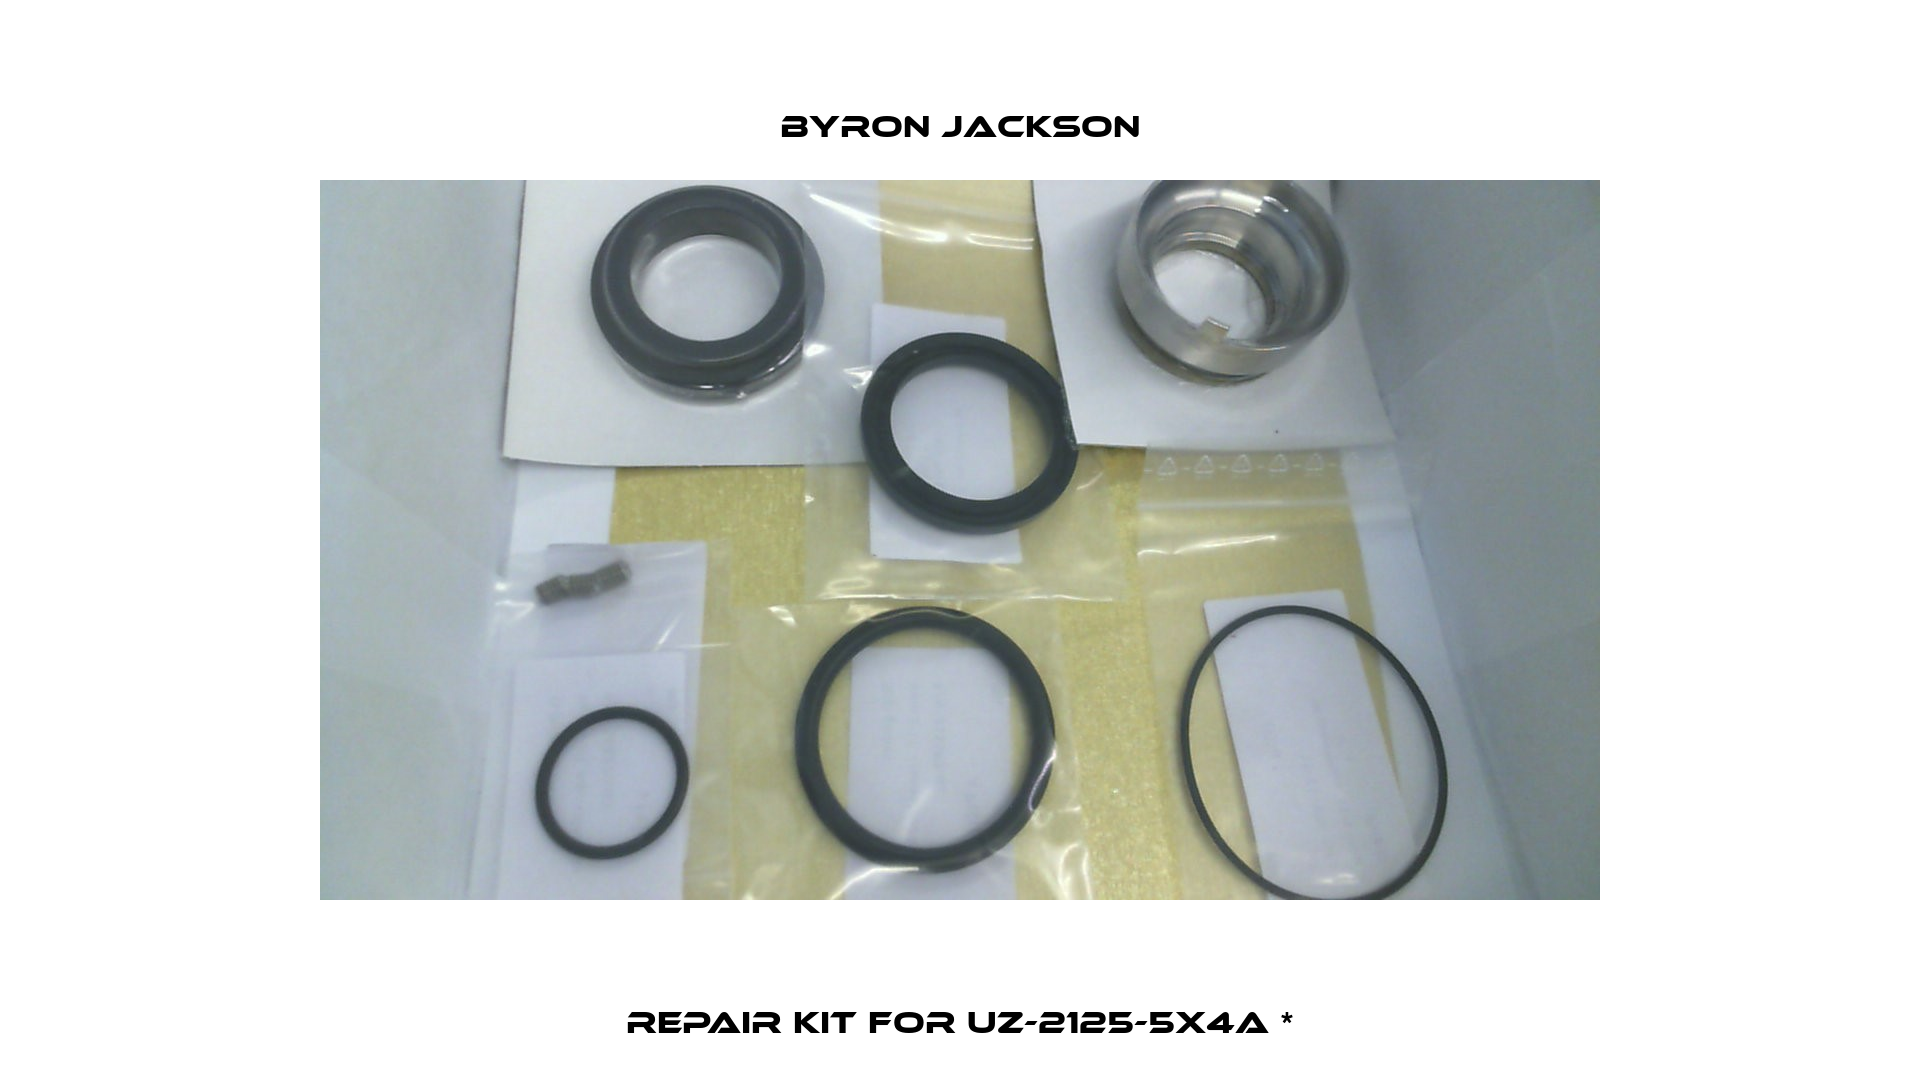 Repair kit for UZ-2125-5X4A * Byron Jackson